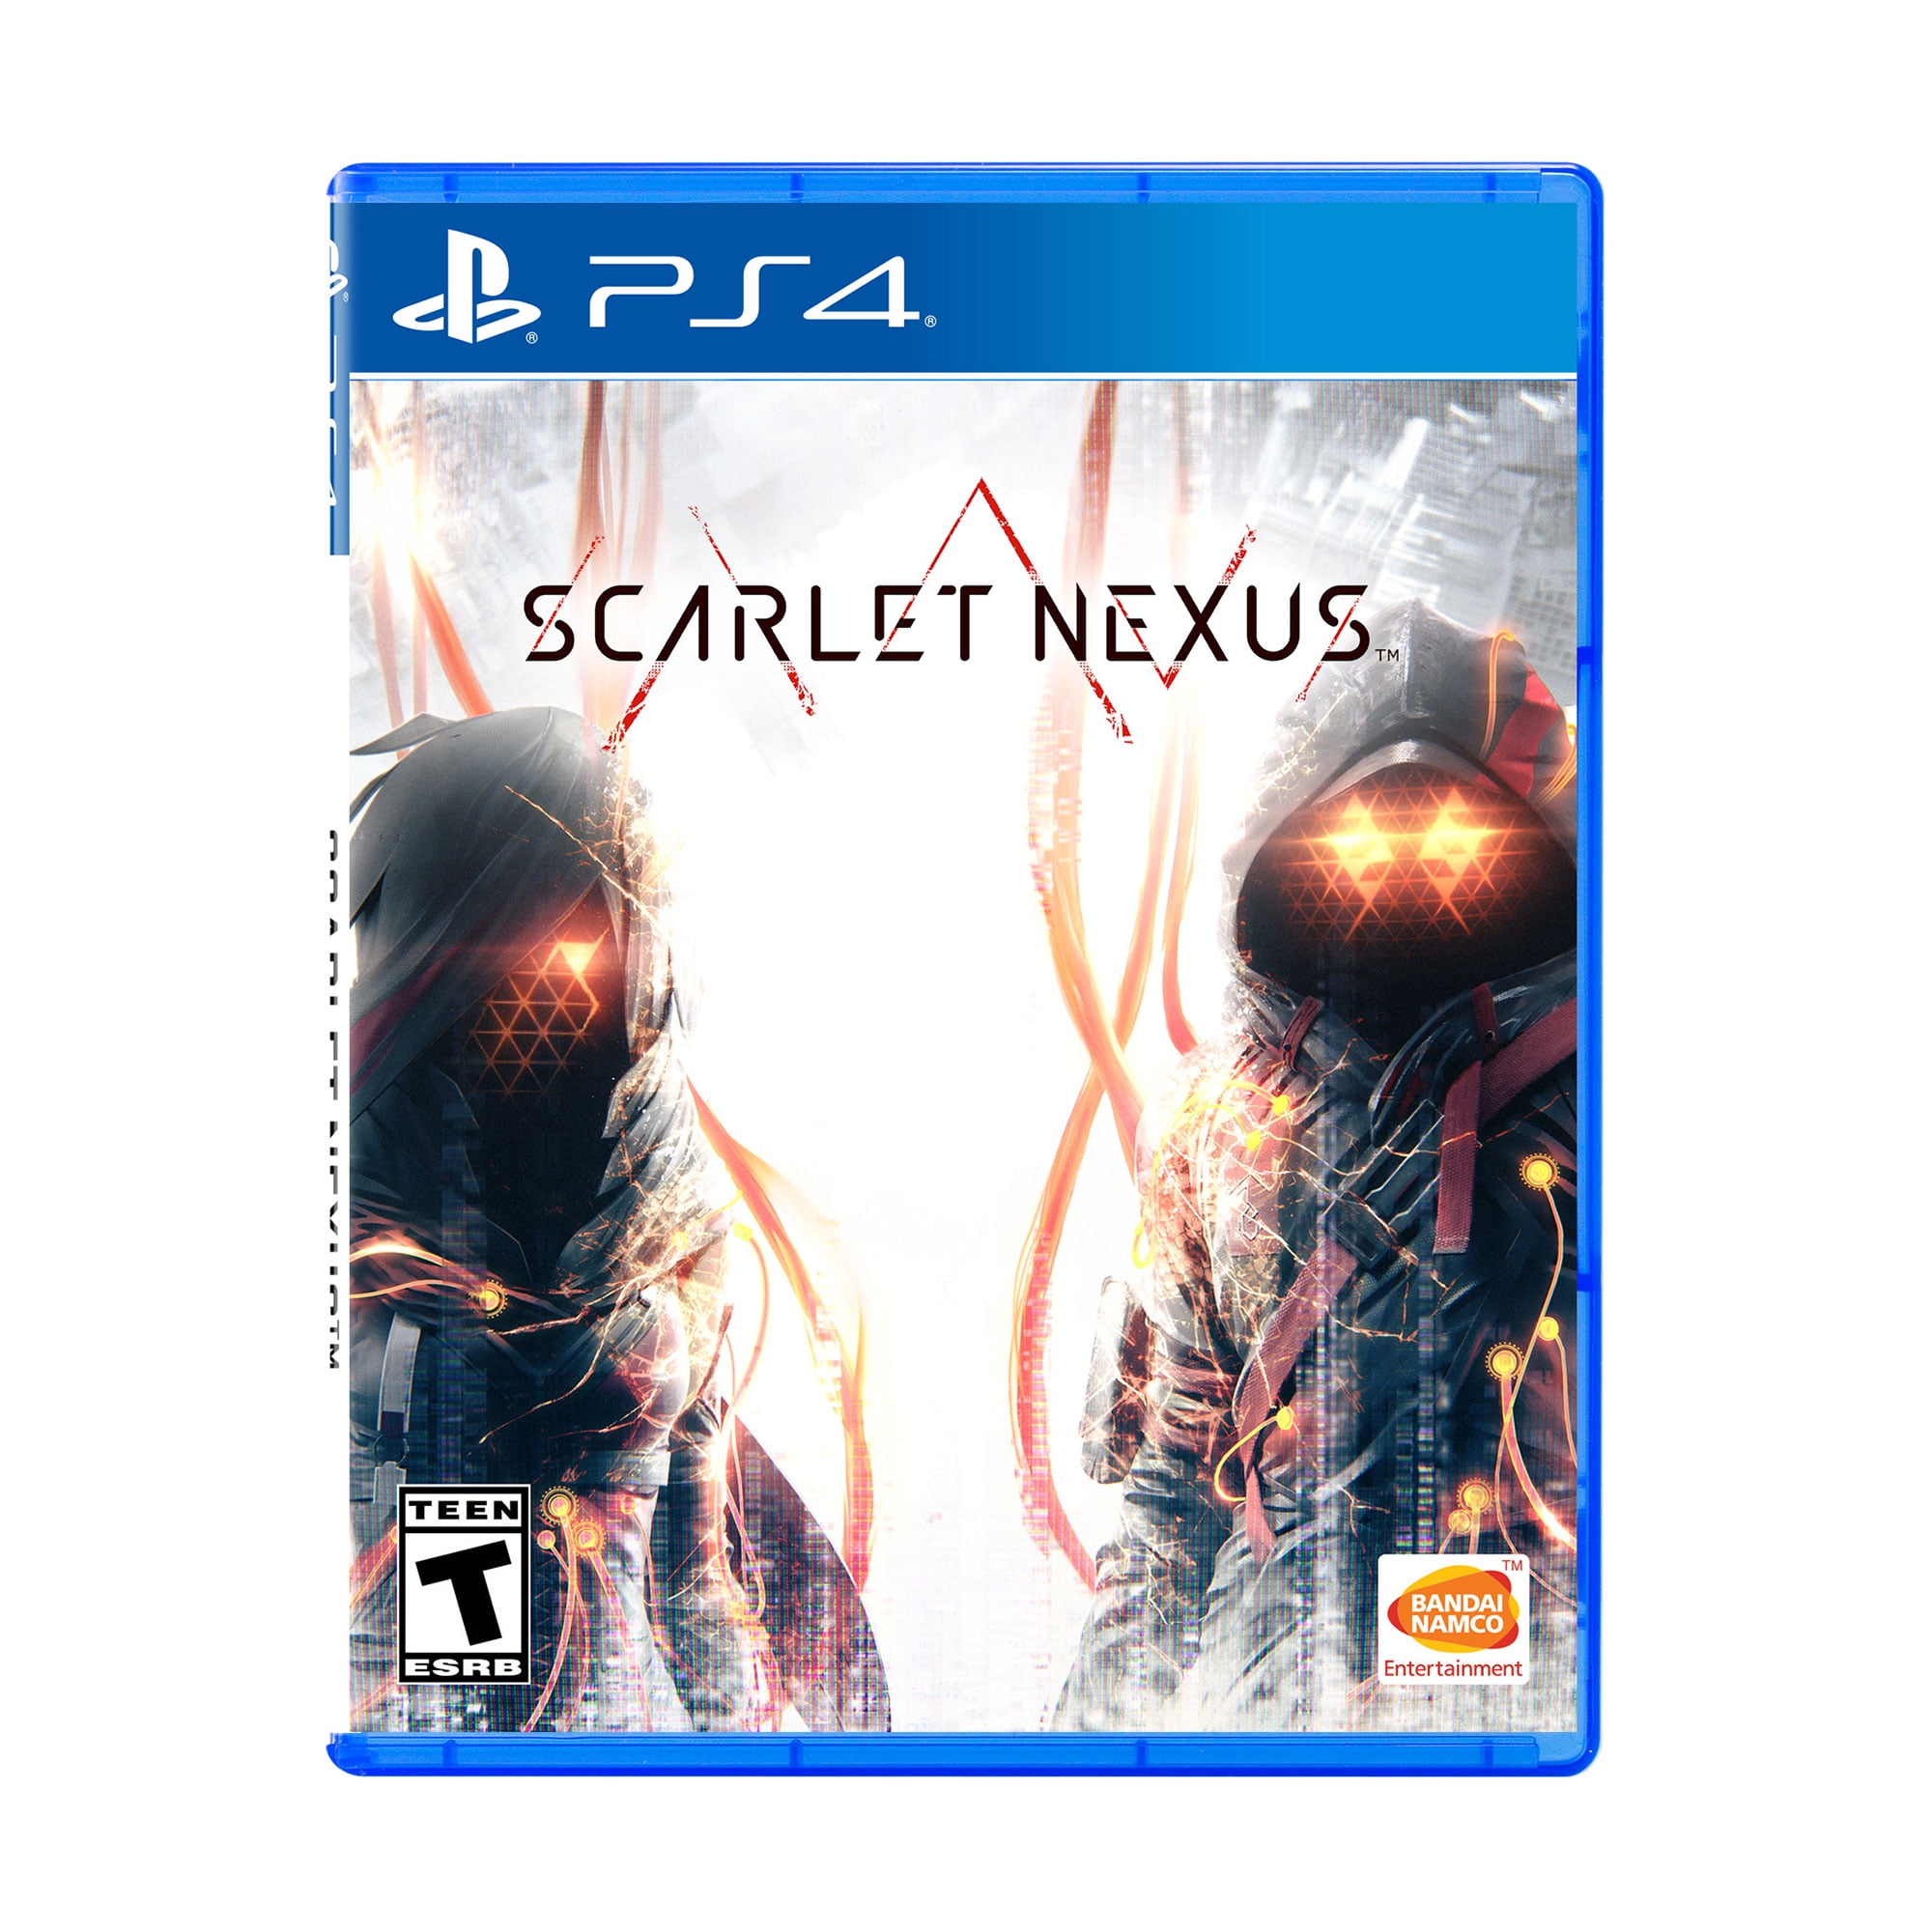 Buy SCARLET NEXUS Bond Enhancement Pack 1 - Microsoft Store en-CC